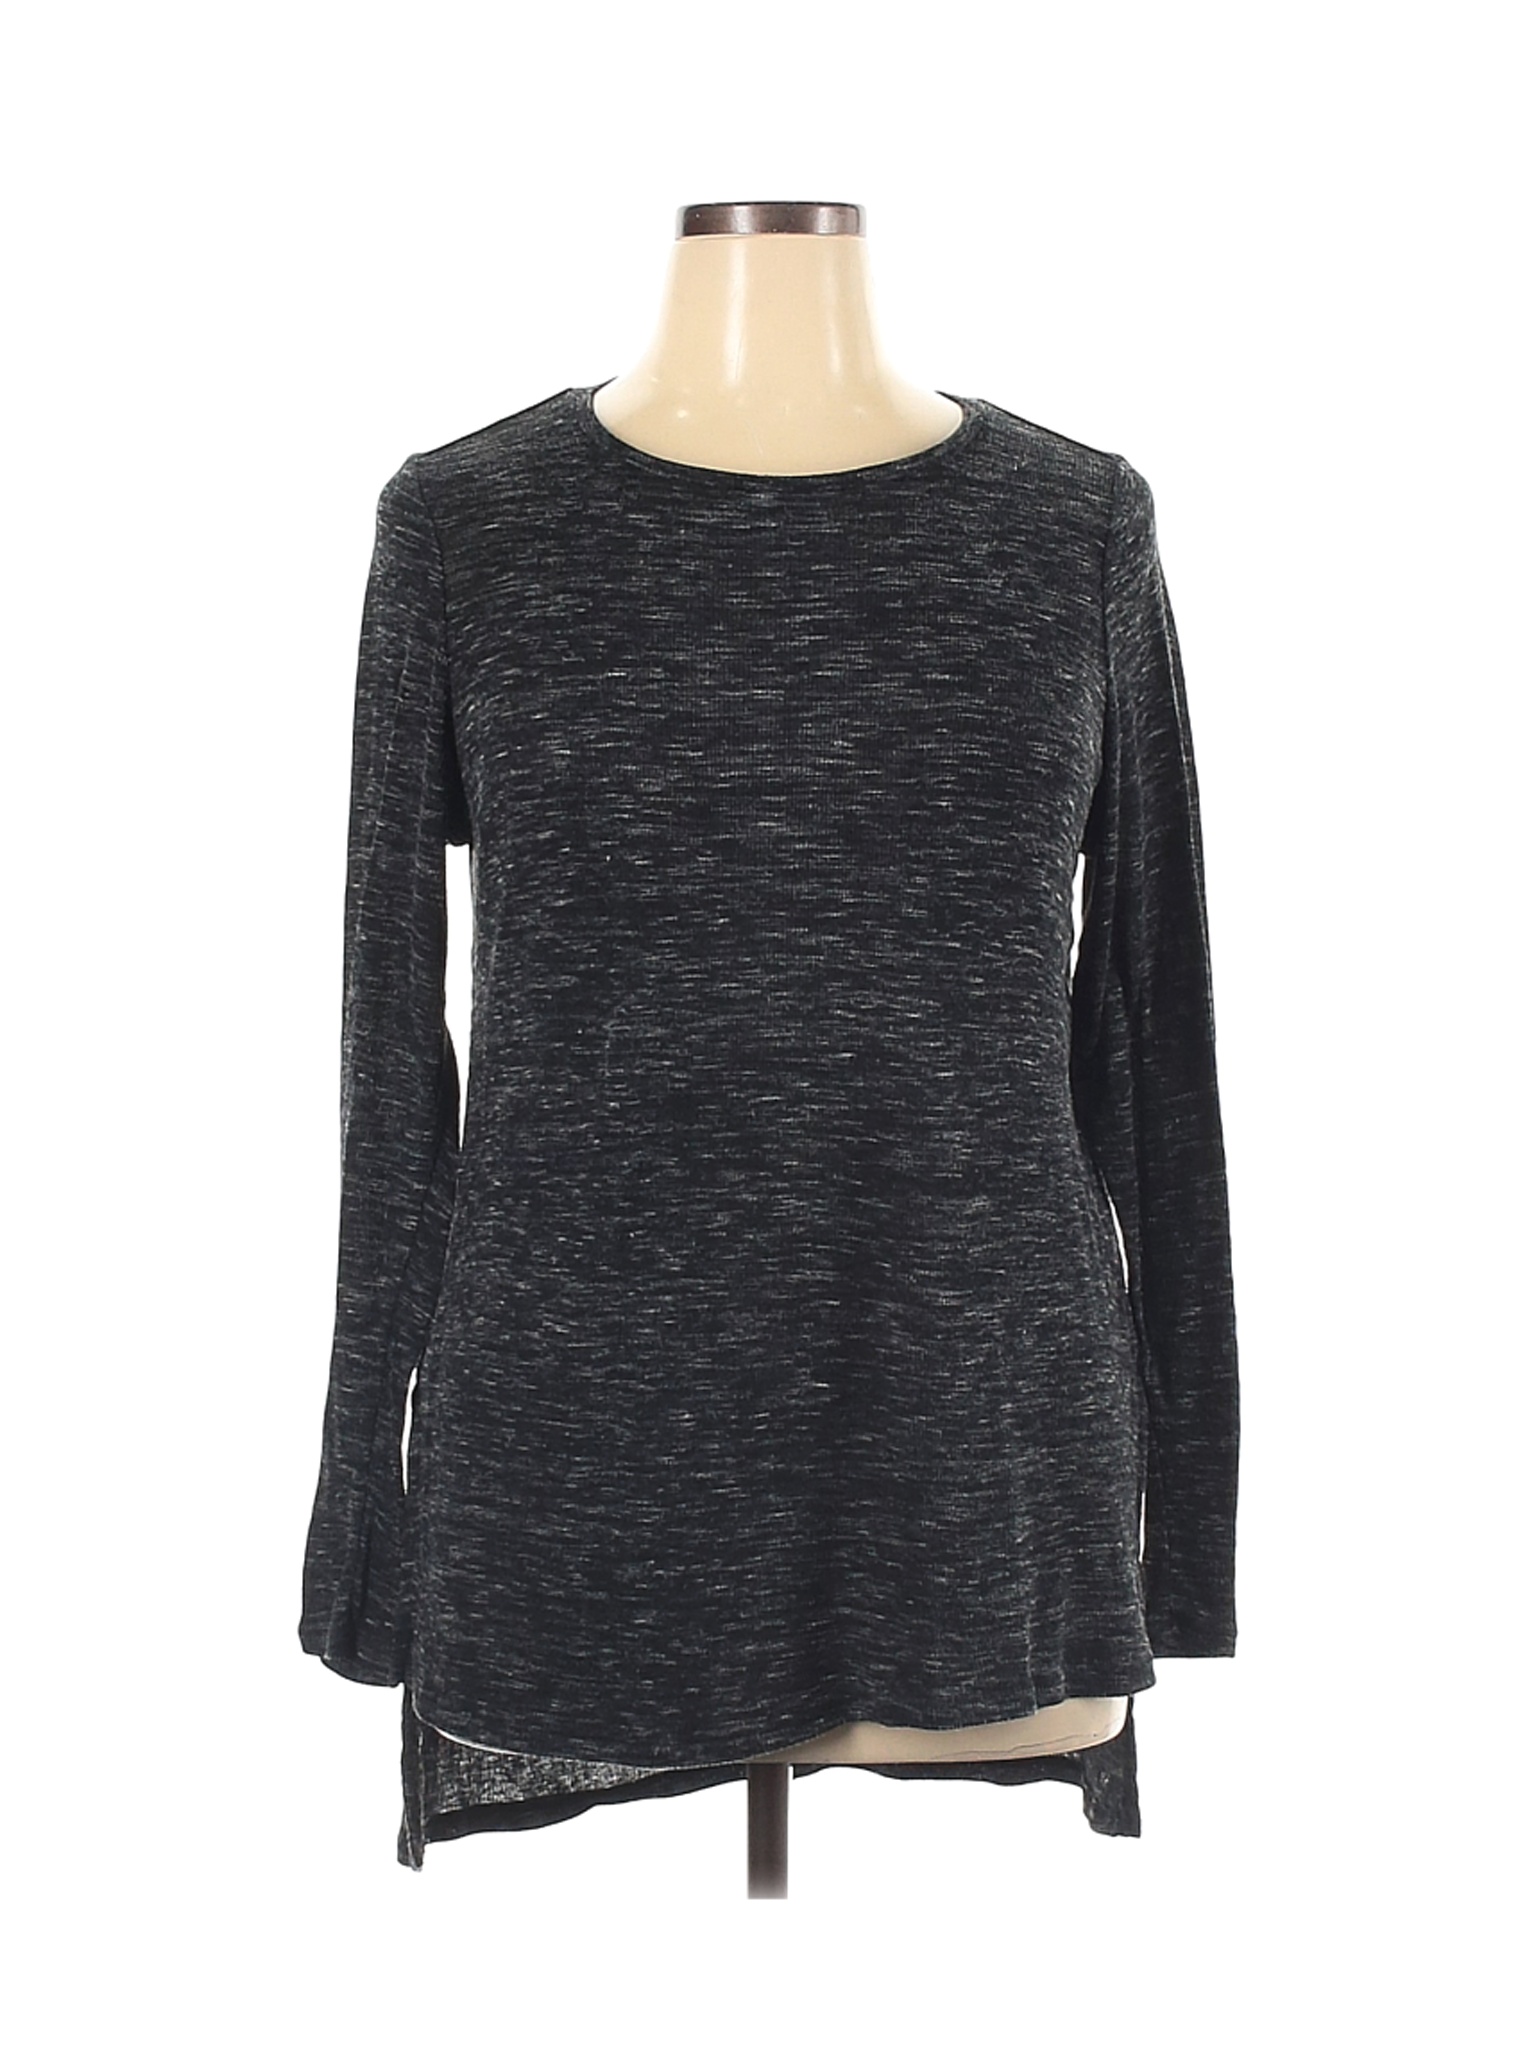 New Directions Women Gray Long Sleeve Top XL | eBay